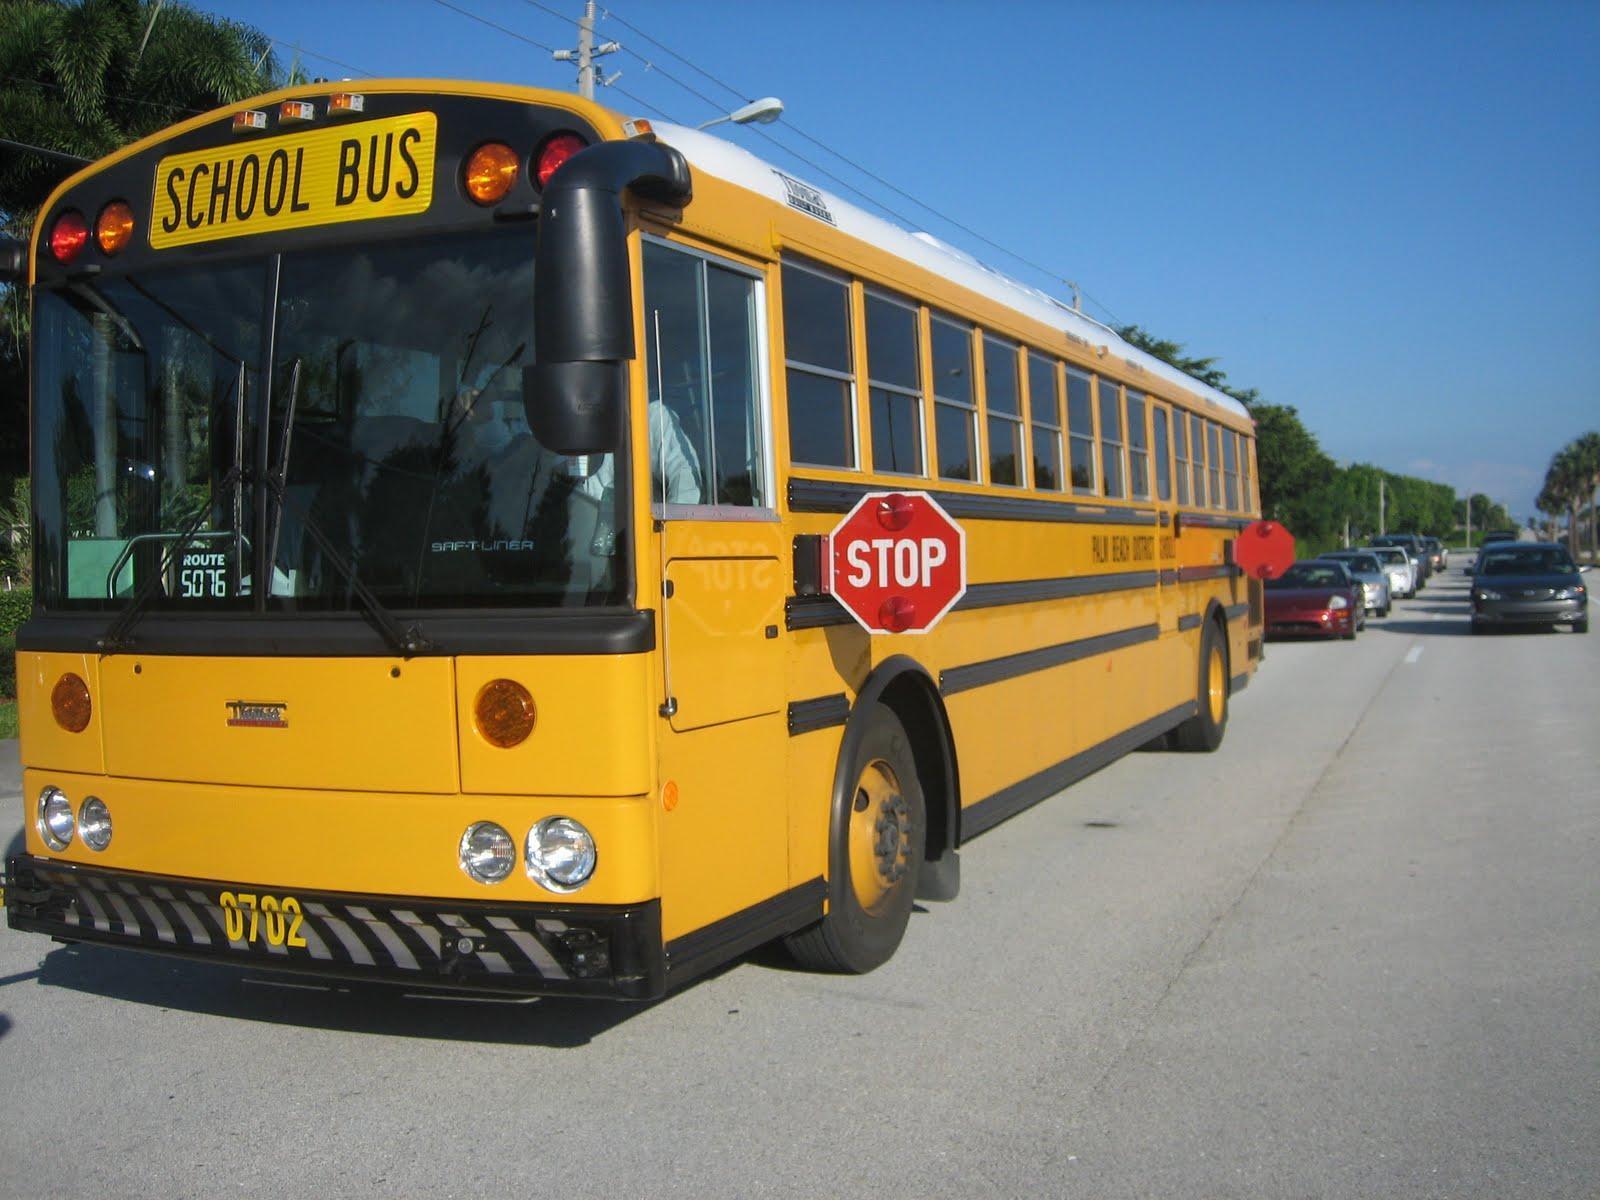 image For > School Bus Wallpaper